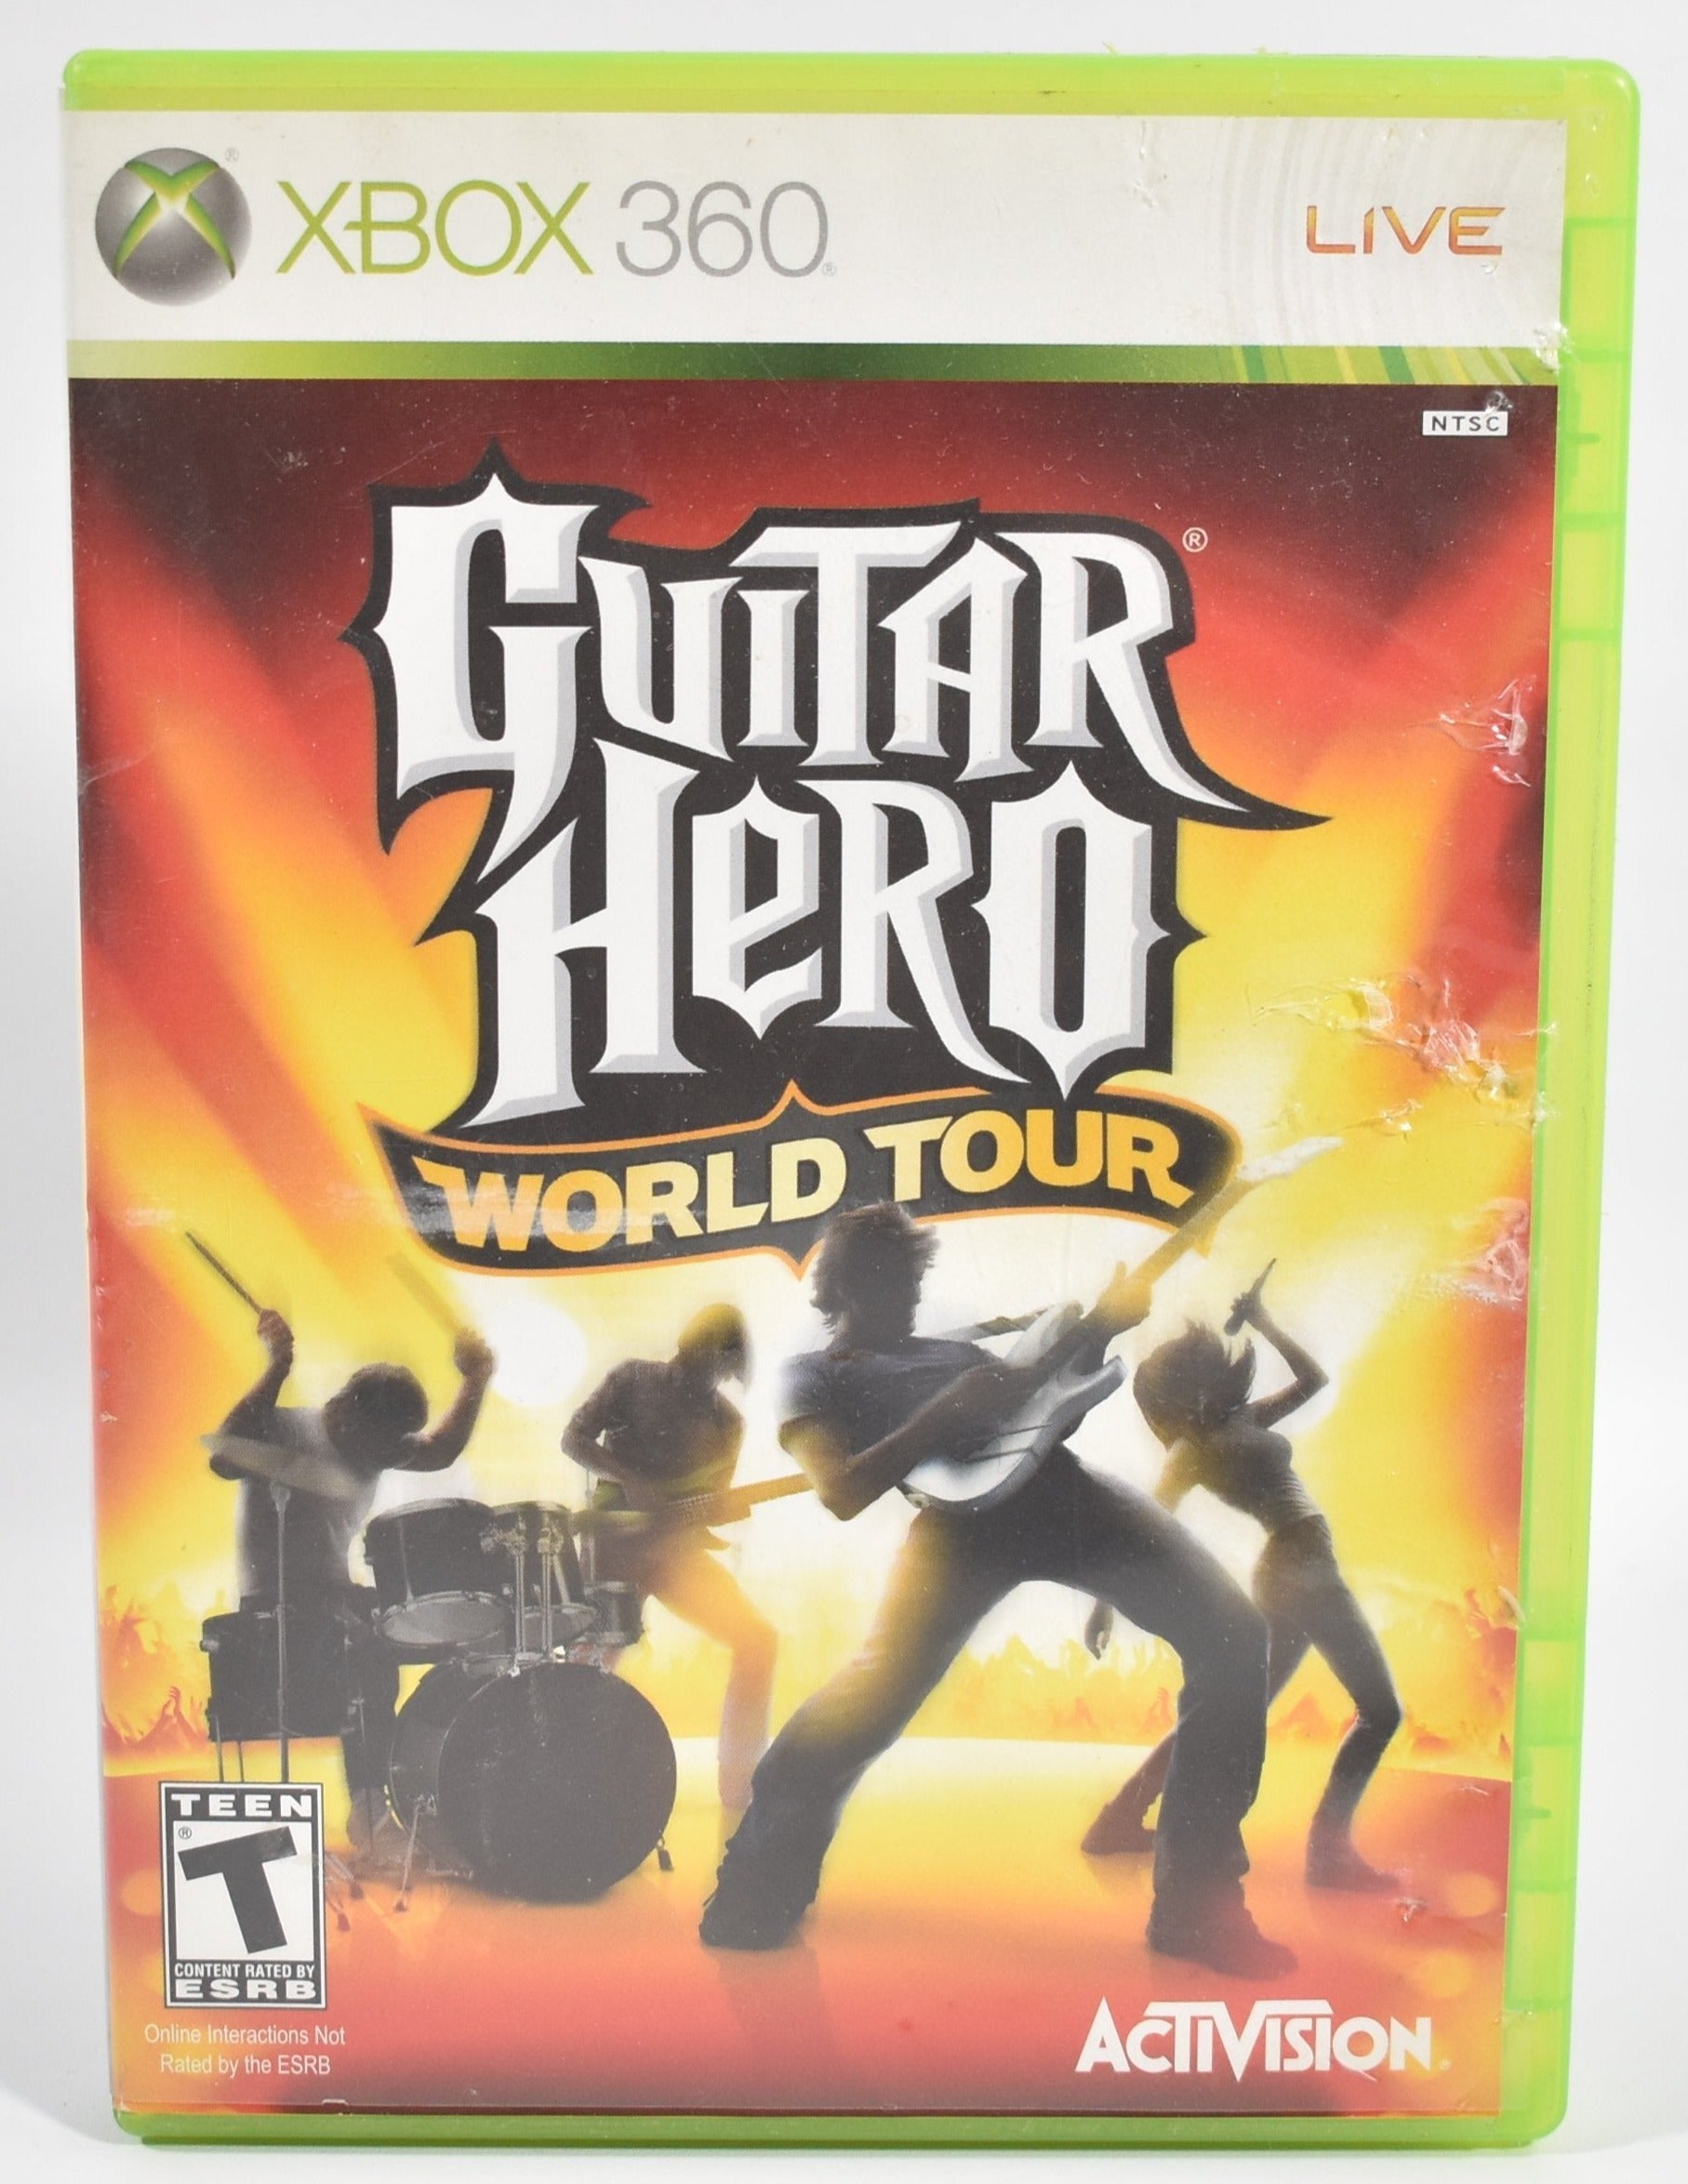 Xbox 360 Video Game Guitar Hero World Tour